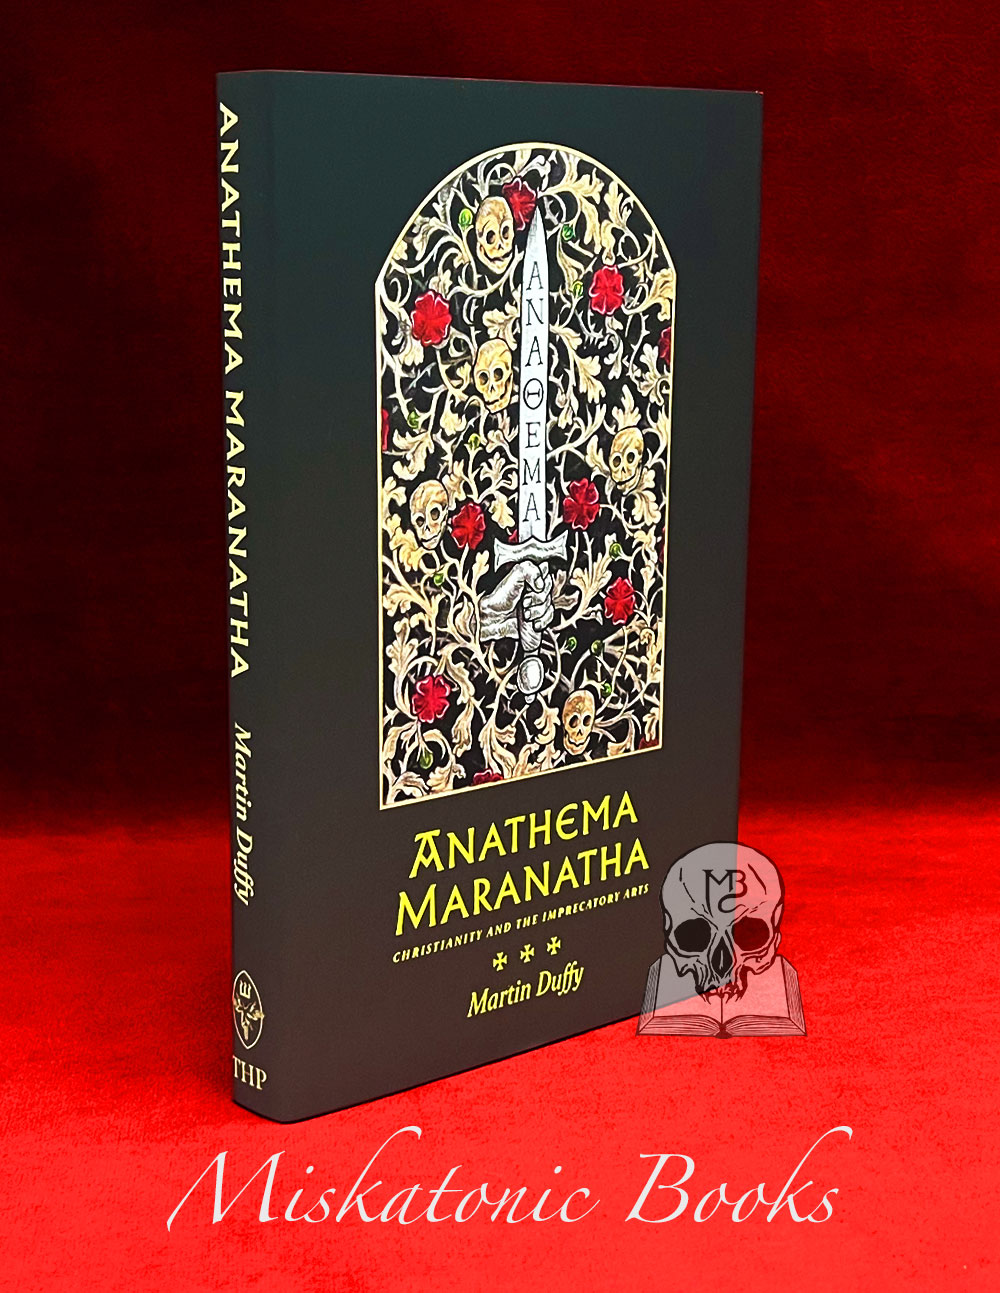 ANATHEMA MARANATHA: Christianity and the Imprecatory Arts by Martin Duffy Limited Edition Hardcover